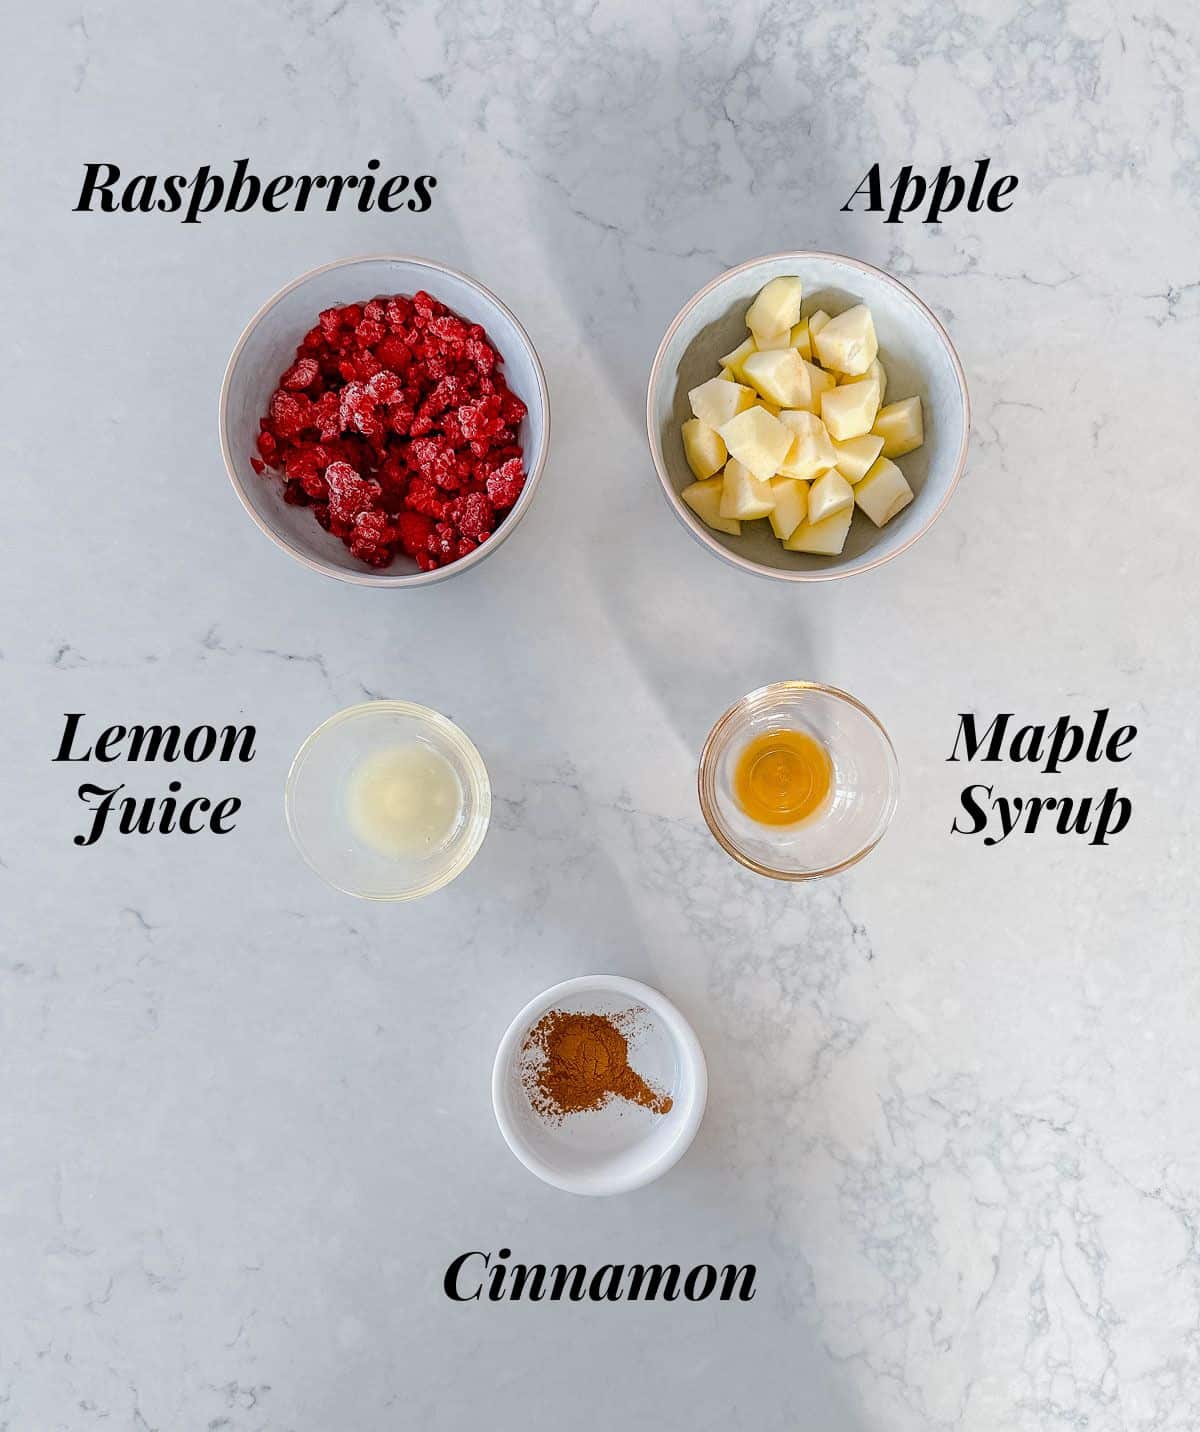 A bowl of raspberries, apples, maple syrup, cinnamon and lemon juice.